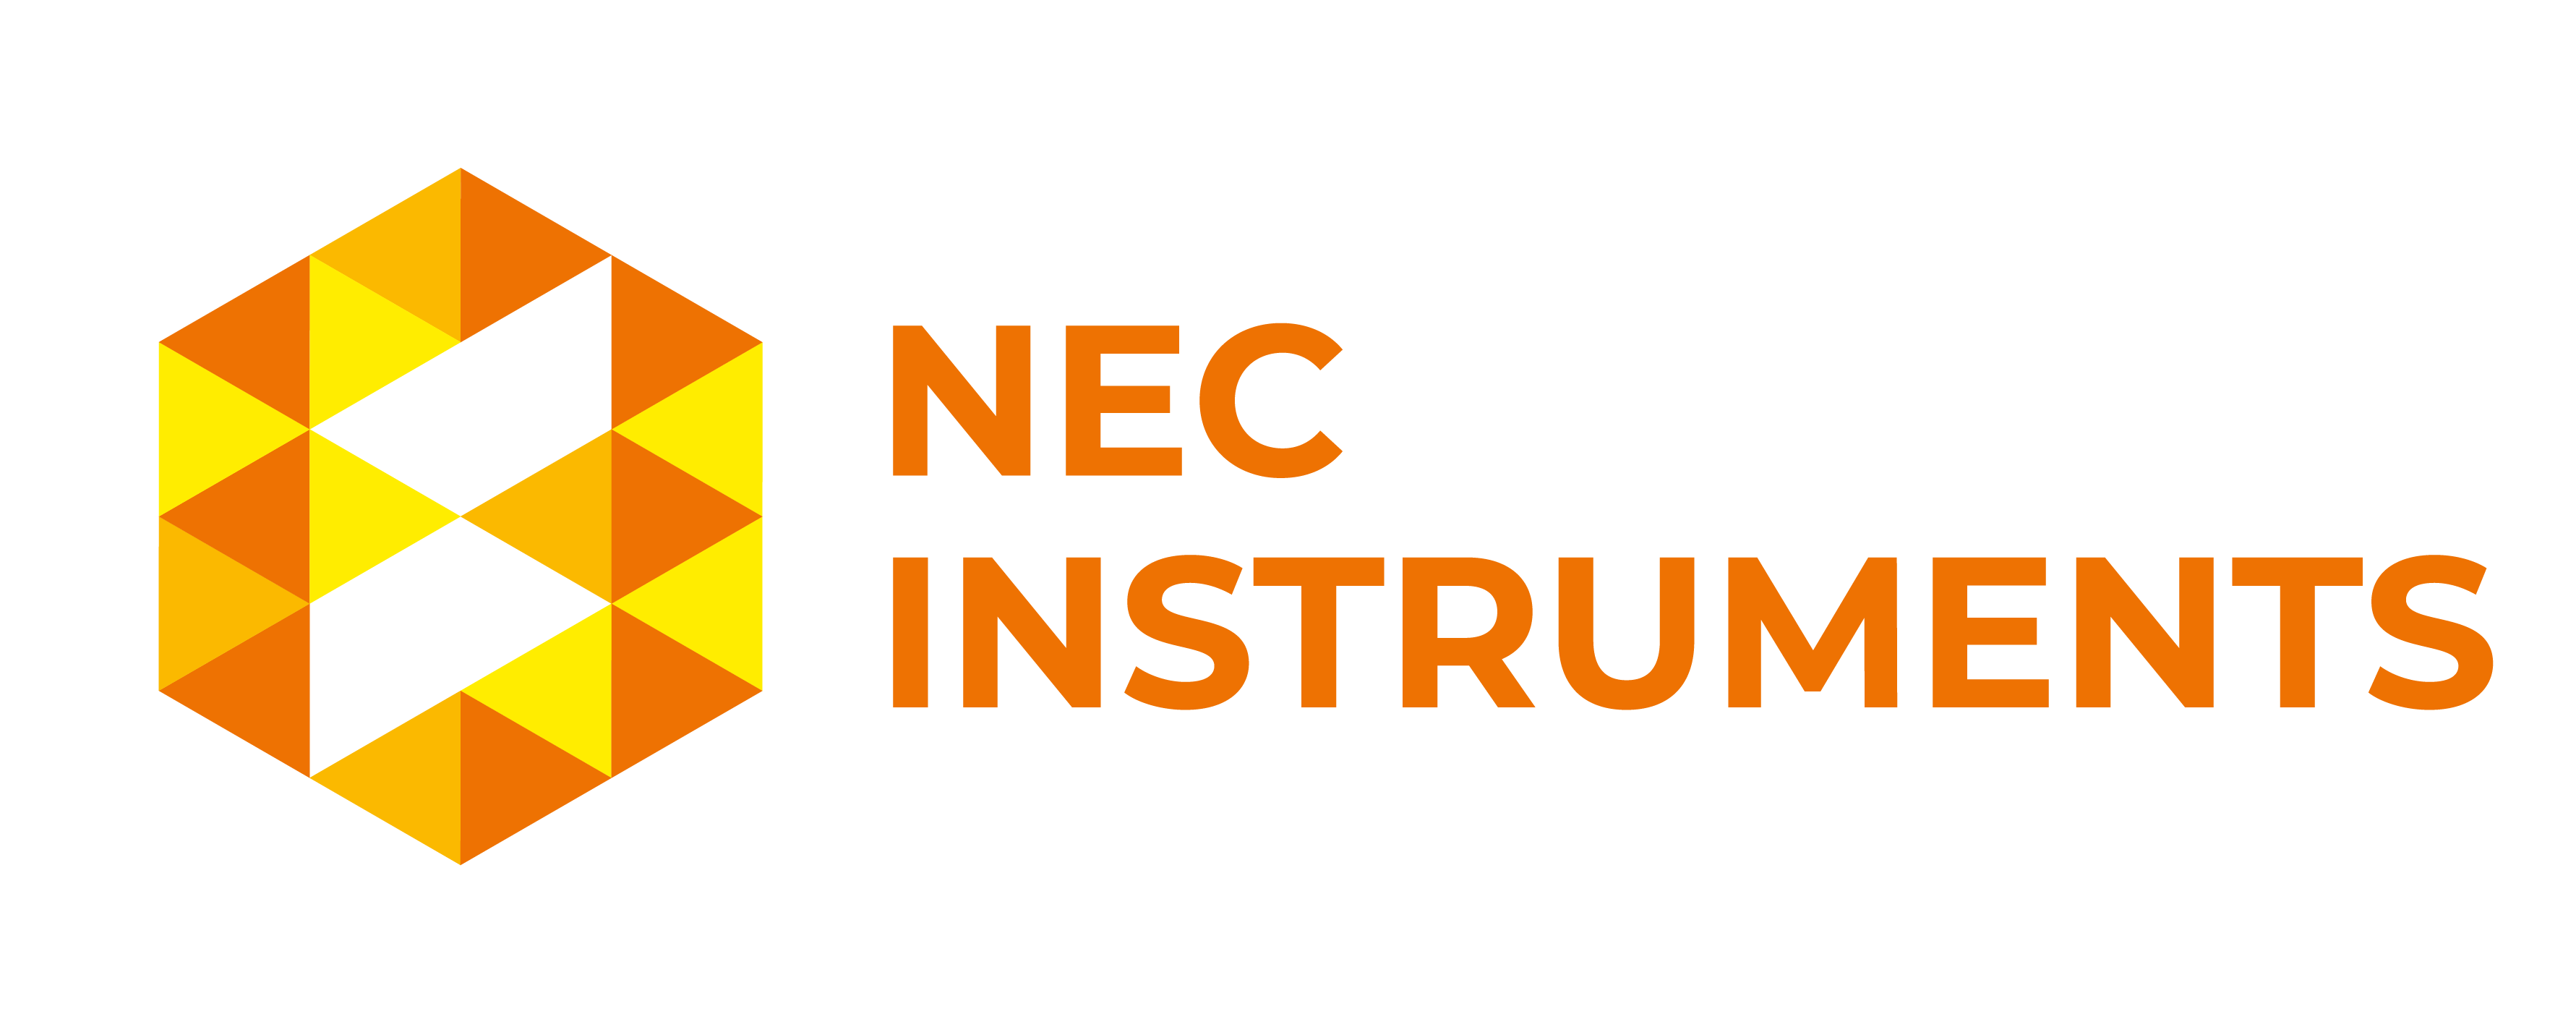 Nec Instruments